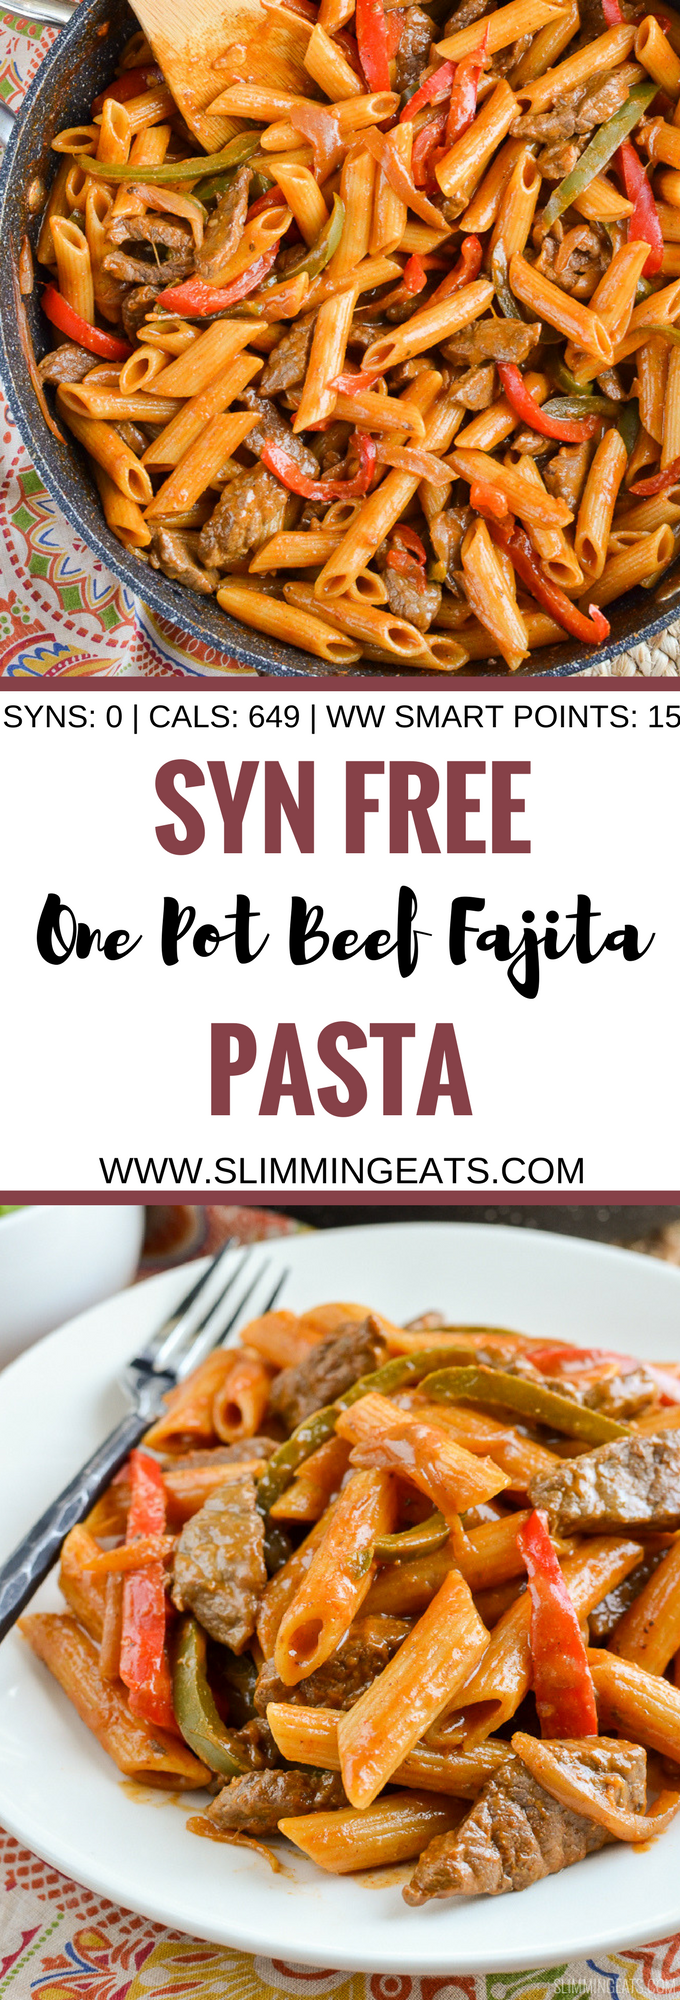 Slimming Eats Syn Free One Pot Beef Fajita Pasta - Slimming World and Weight Watchers friendly